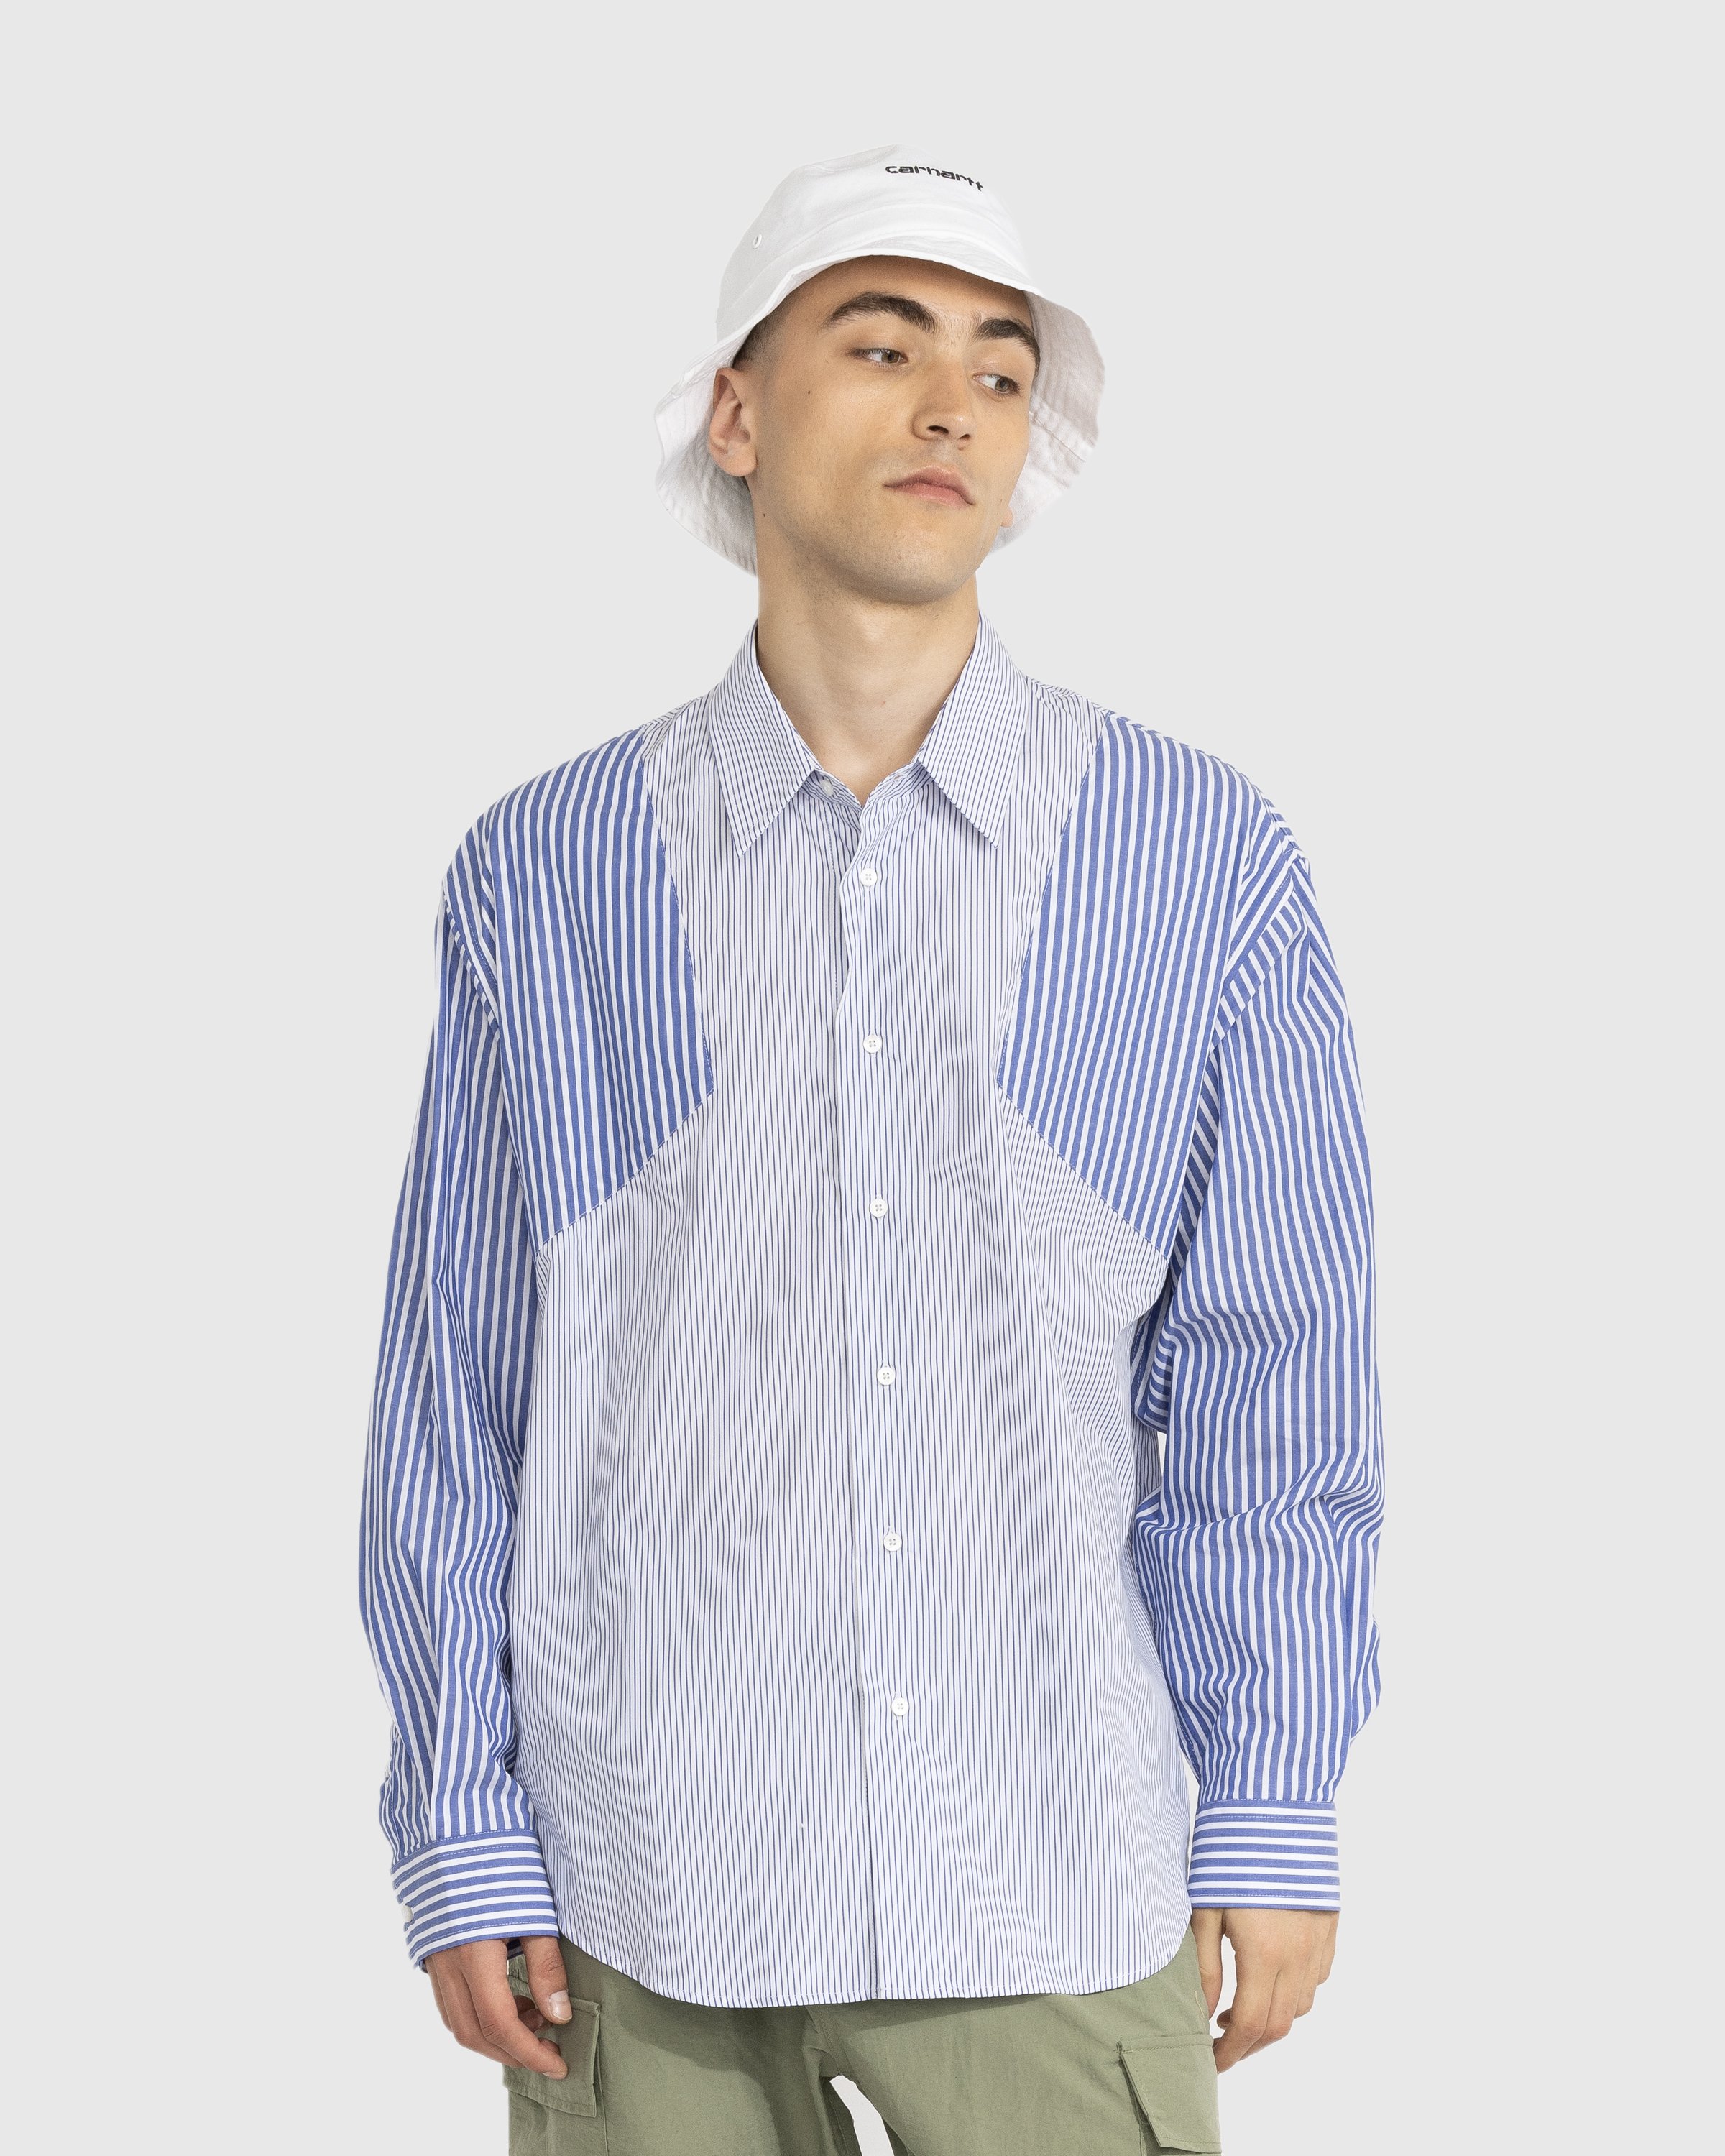 Trussardi - Shirt Cotton Mix Stripes - Clothing - Blue - Image 2